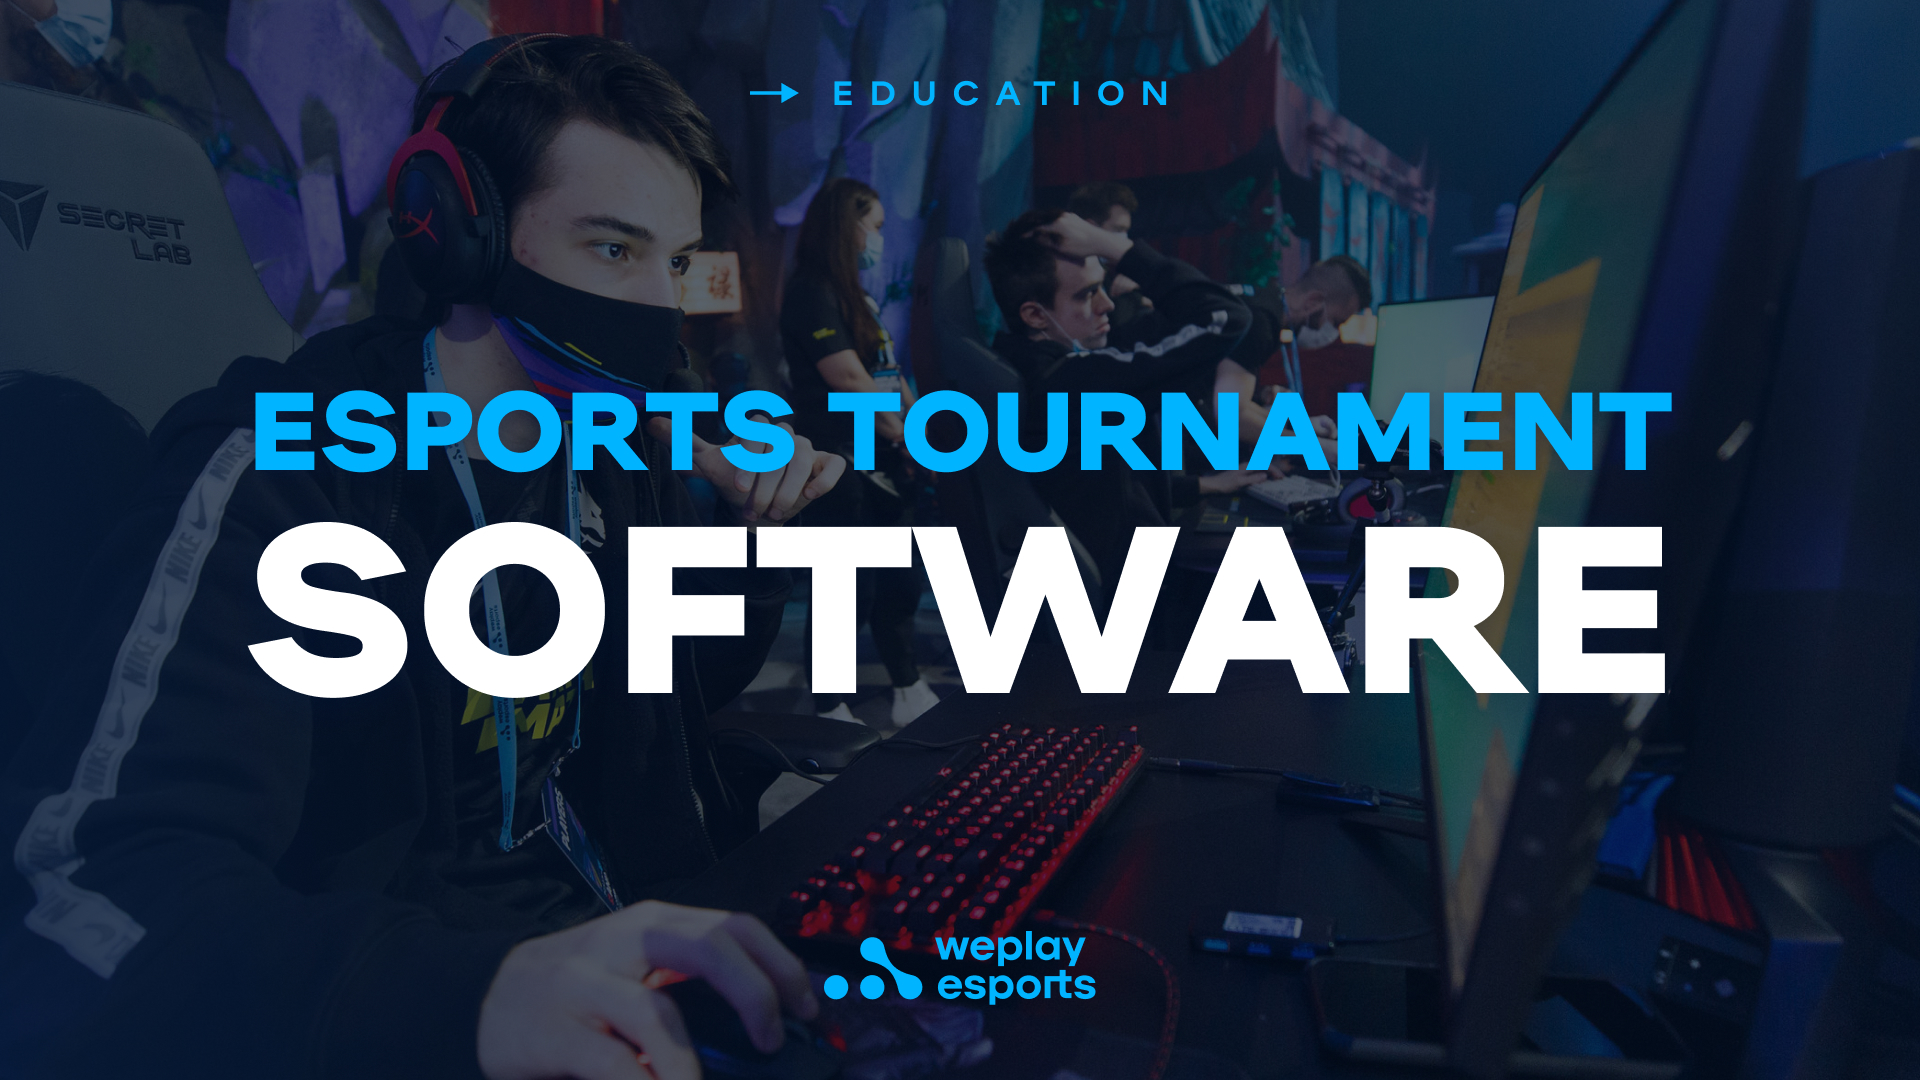 Esports Software - Tournament Software